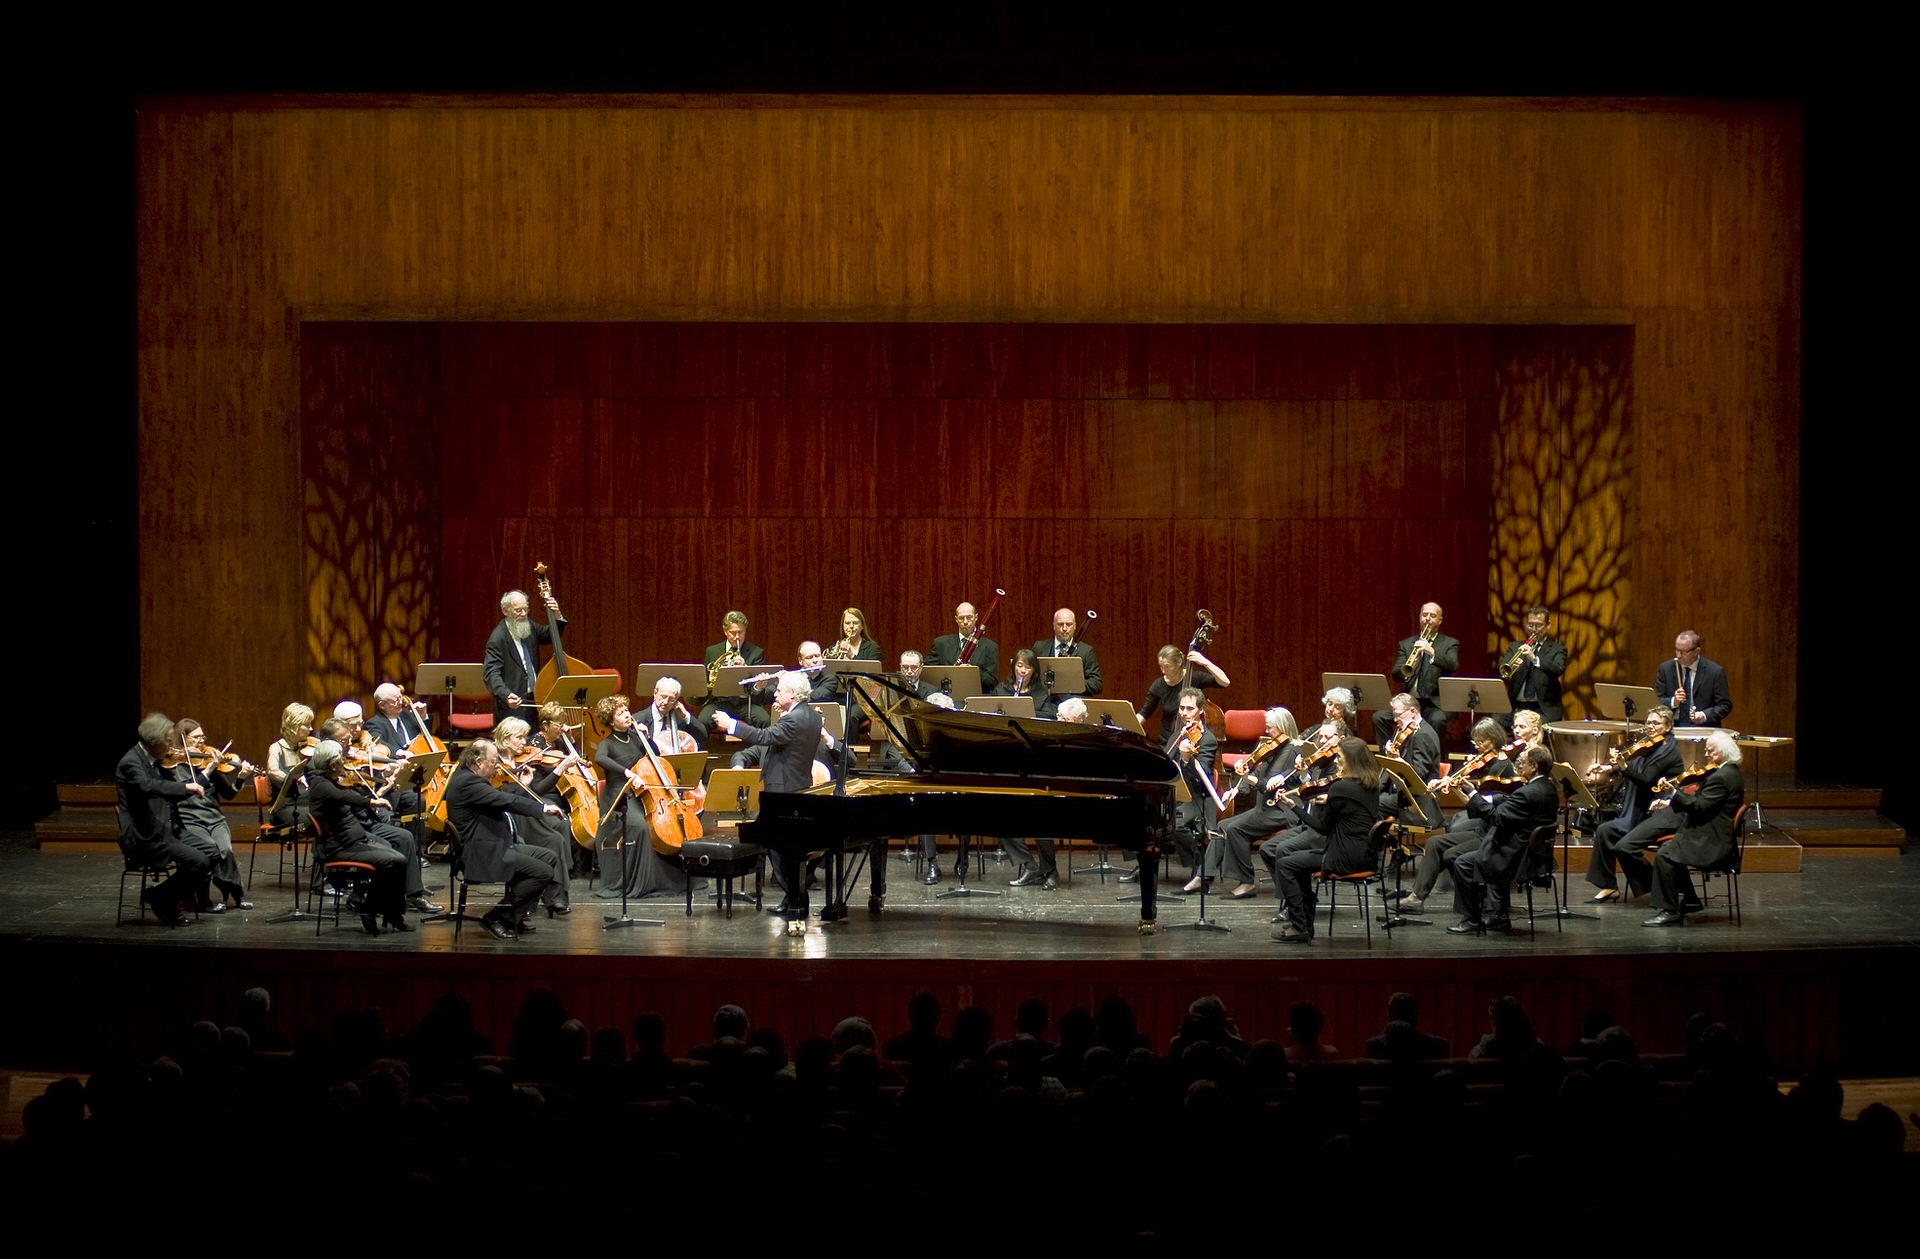 Mια συναυλία αφιερωμένη αποκλειστικά σε έργα Wolfgang Amadeus Mozart από τον Sir András Schiff 